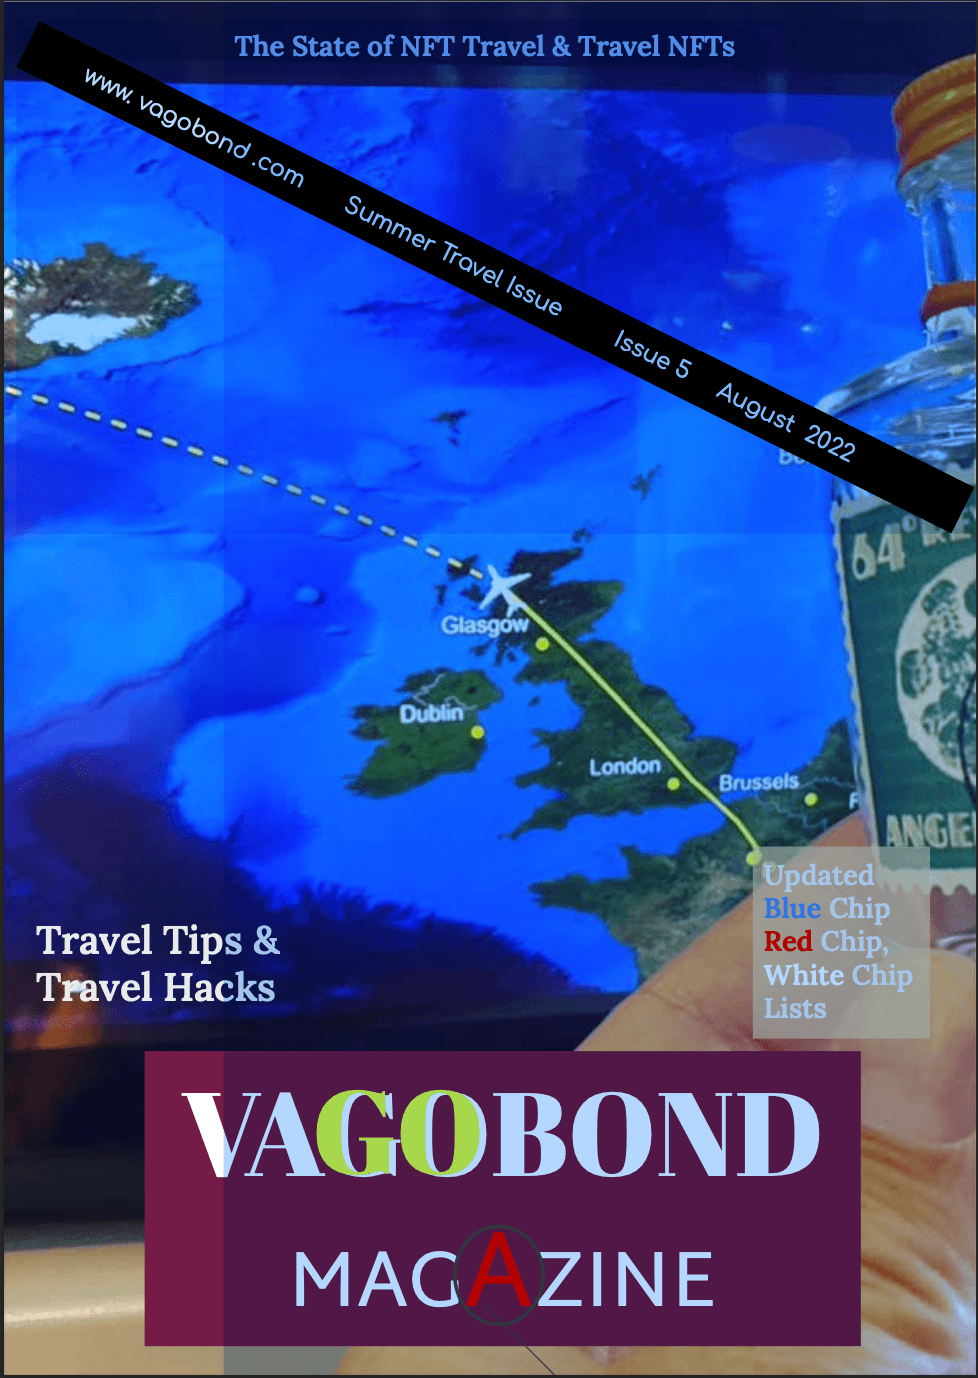 Vagobond Magazine #5 - NFT Travel Edition - Summer 2022